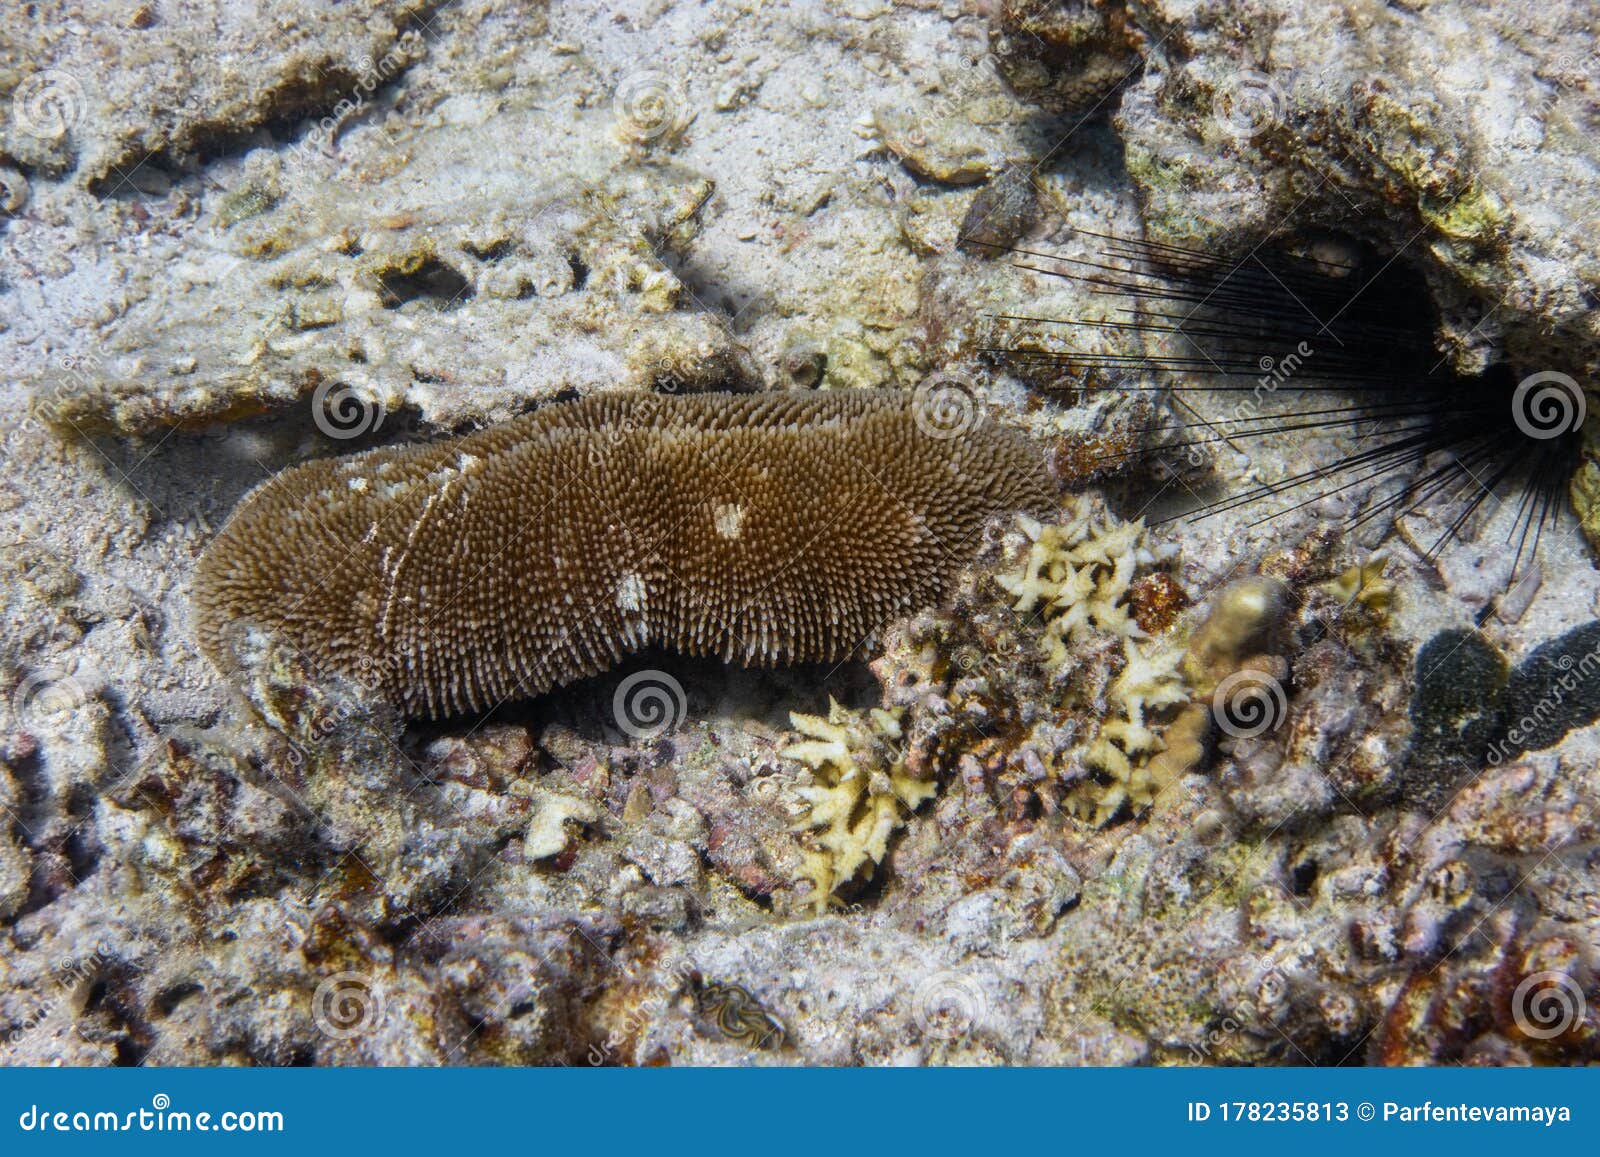 sea cucumber holothuroidea laying in the ocean floor, sea urchin diadema setosum hiden in the rock. marine echinoderm animal,